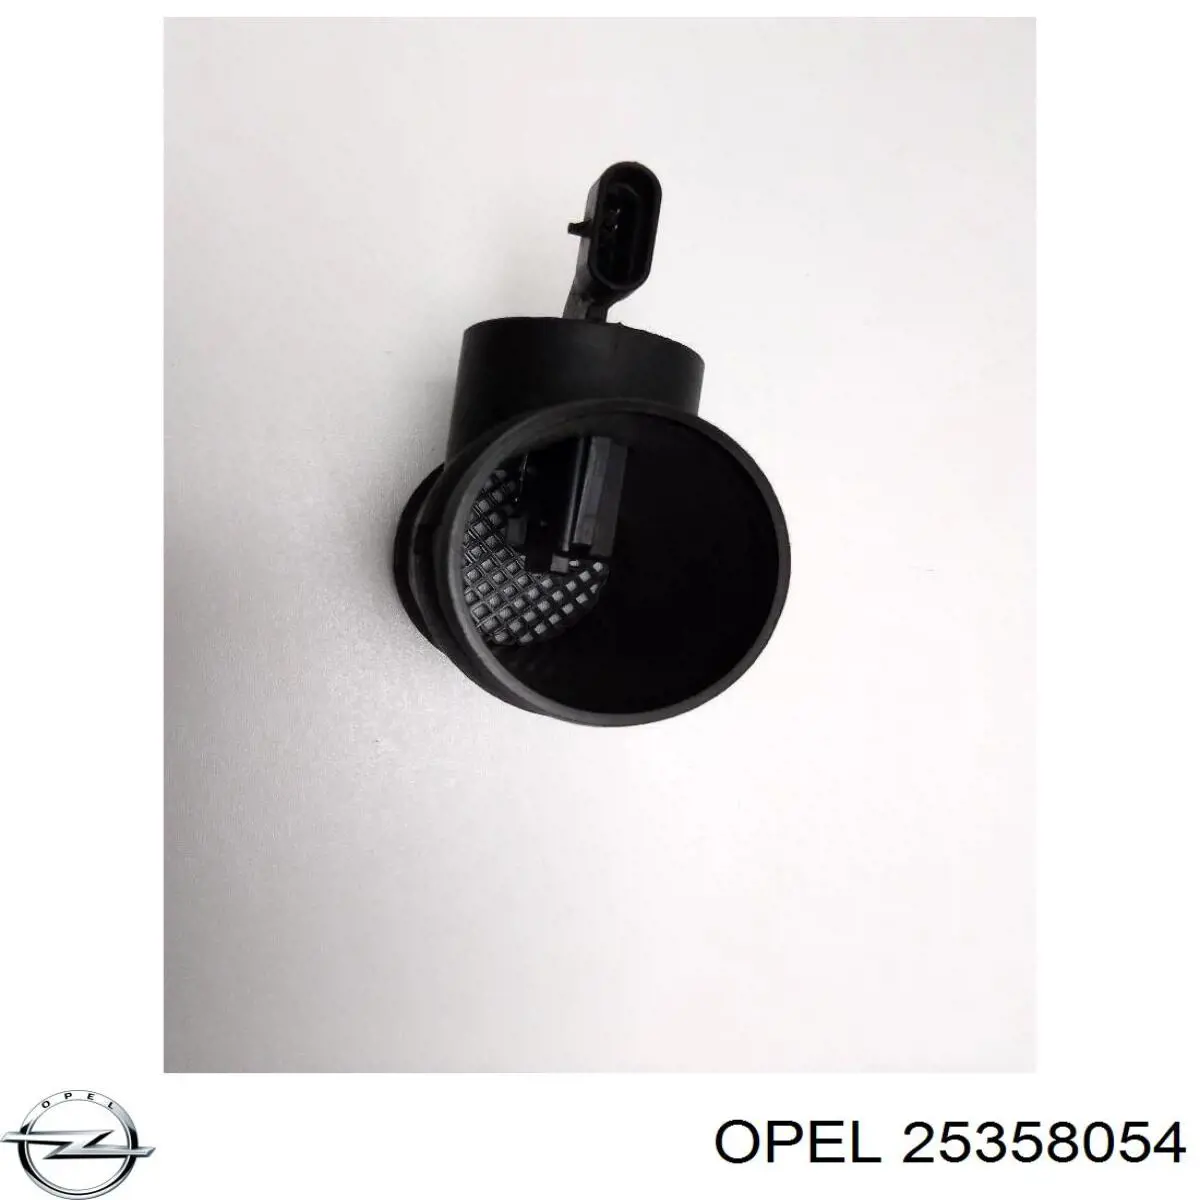 25358054 Opel sensor de fluxo (consumo de ar, medidor de consumo M.A.F. - (Mass Airflow))